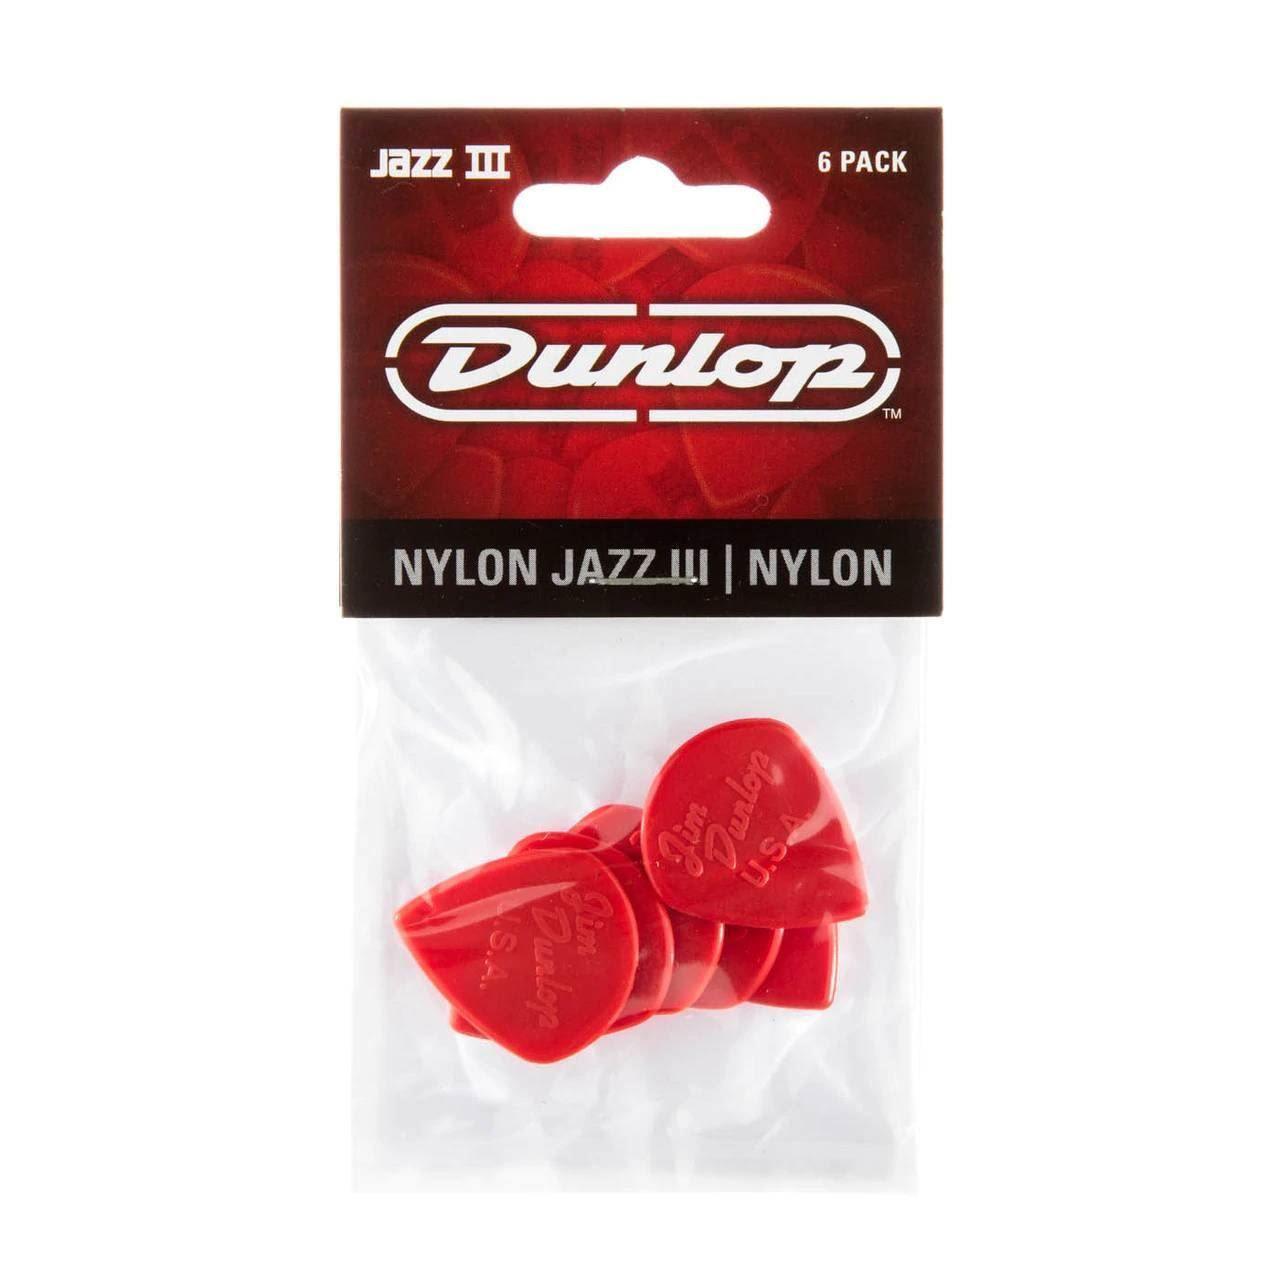 Dunlop Jazz III Standard Pick Pack - Guitars - Picks by Dunlop at Muso's Stuff